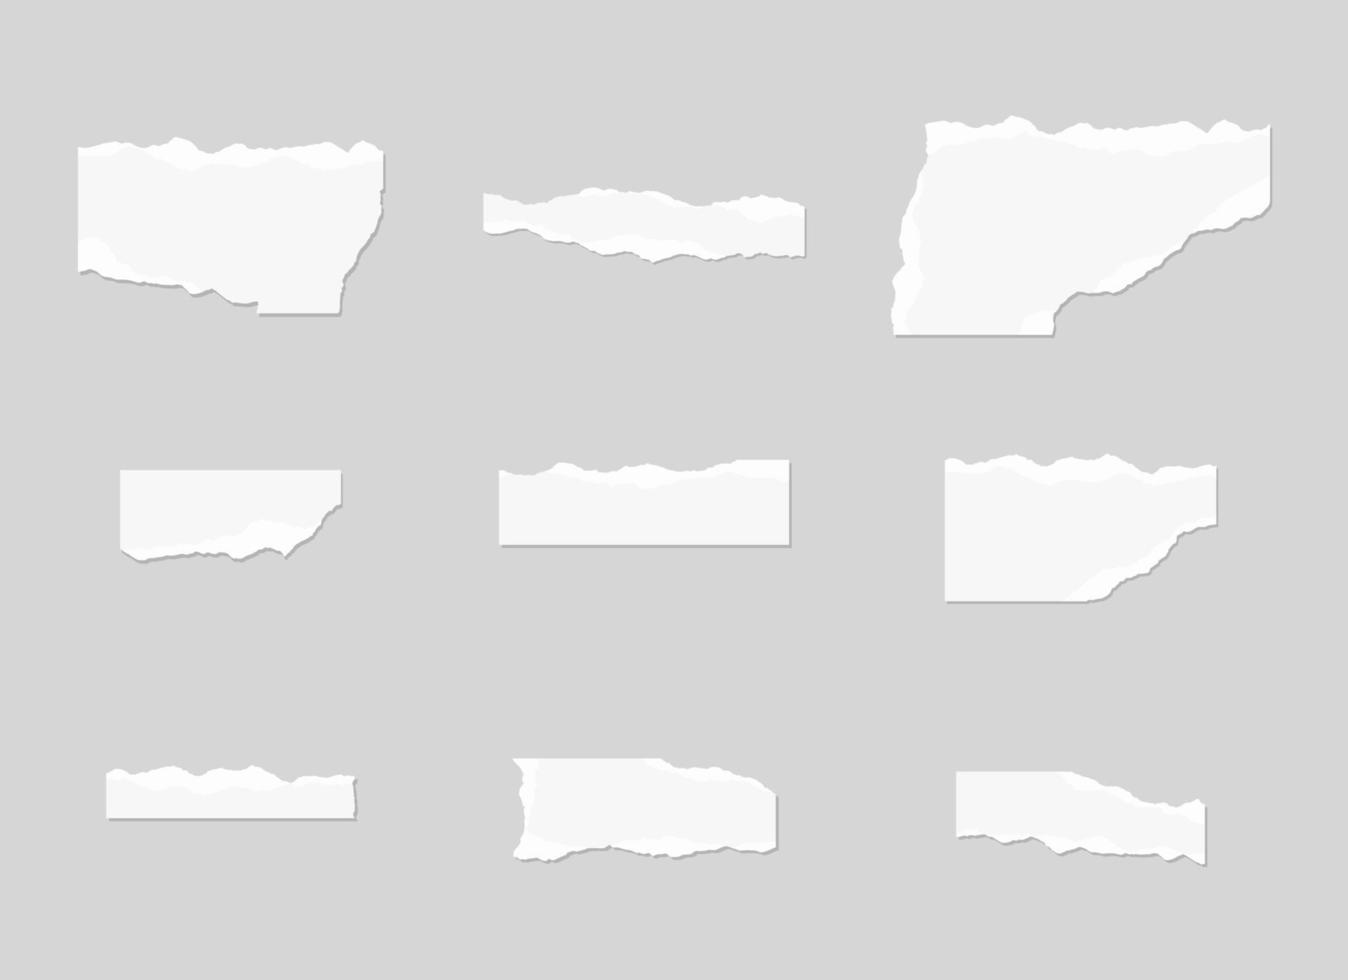 juego de papel rasgado. juego de papel rasgado. ilustración vectorial. vector